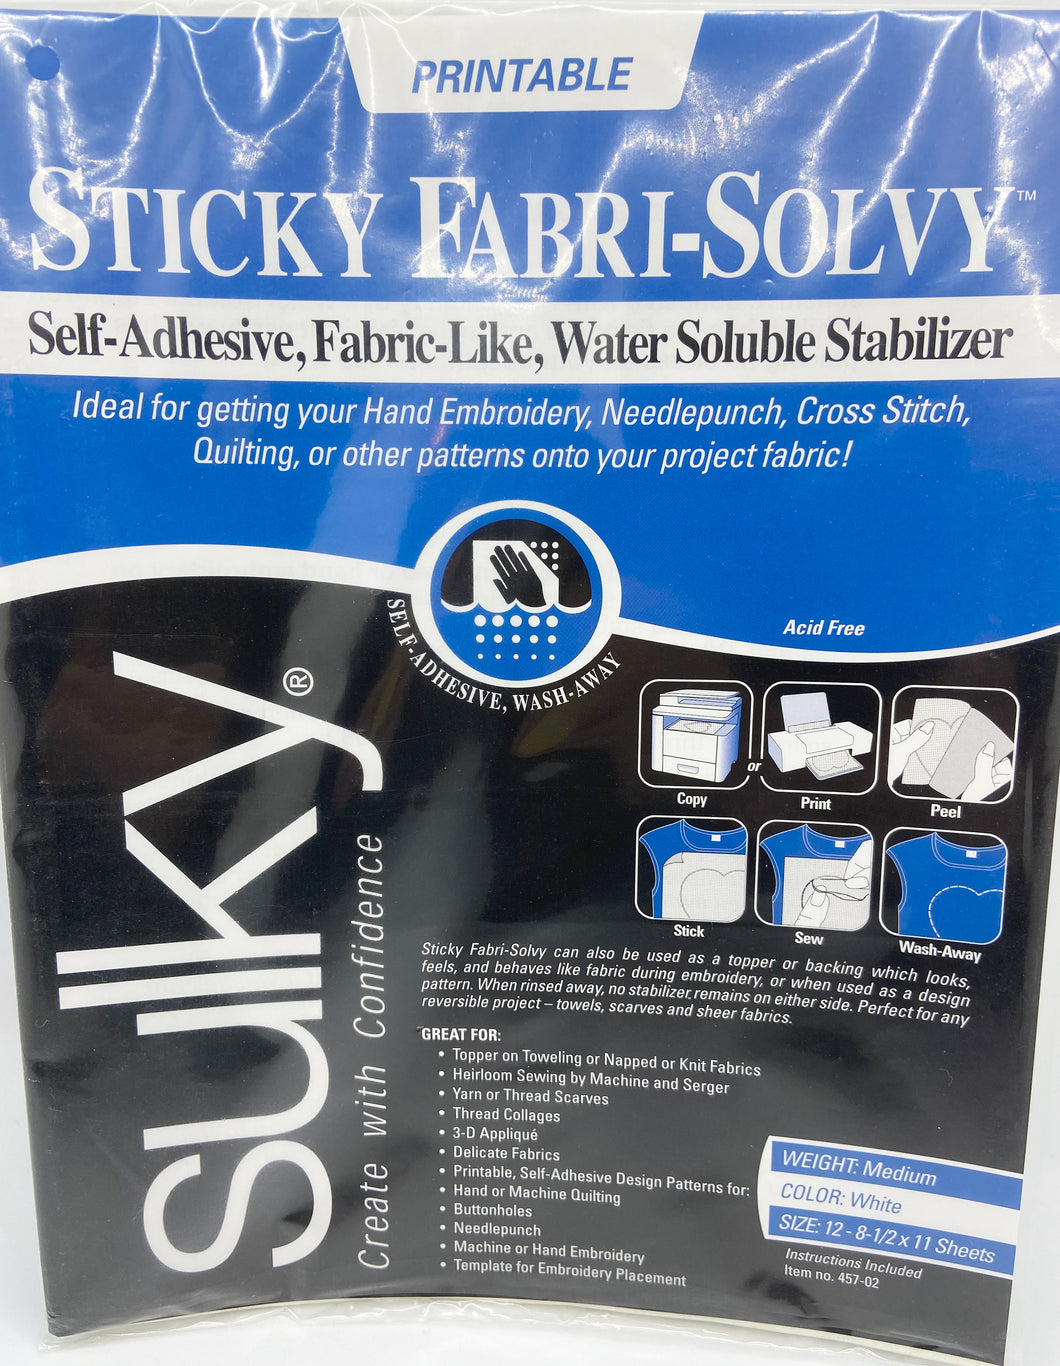 Sticky Fabri-solvy Adhesive Printable Sulky Temporary Water